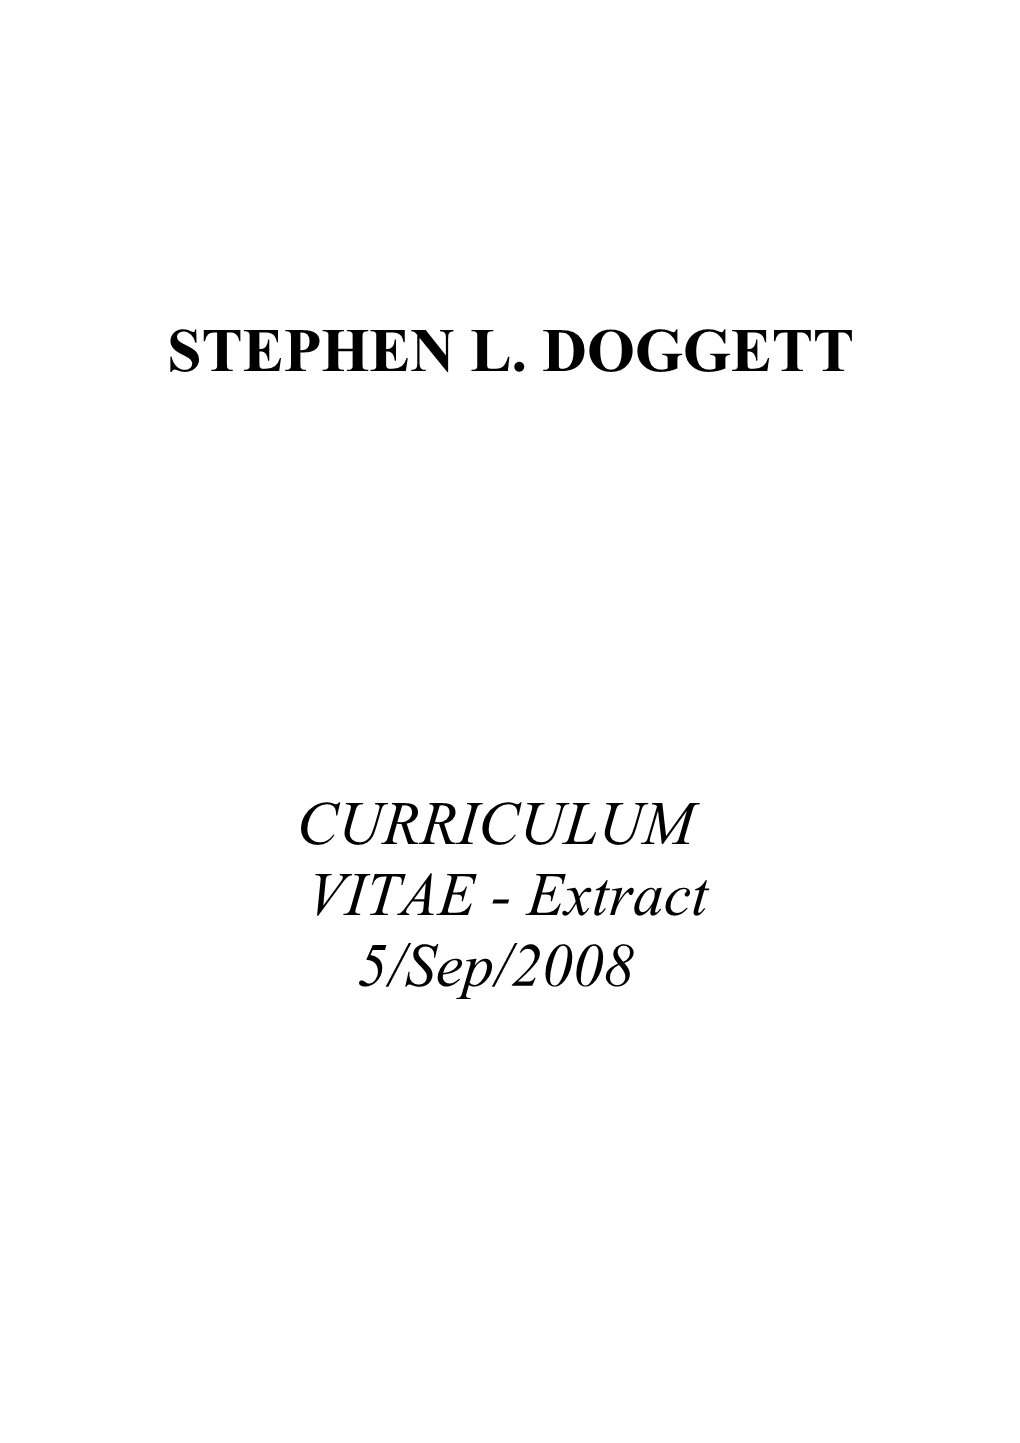 Stephen L. Doggett